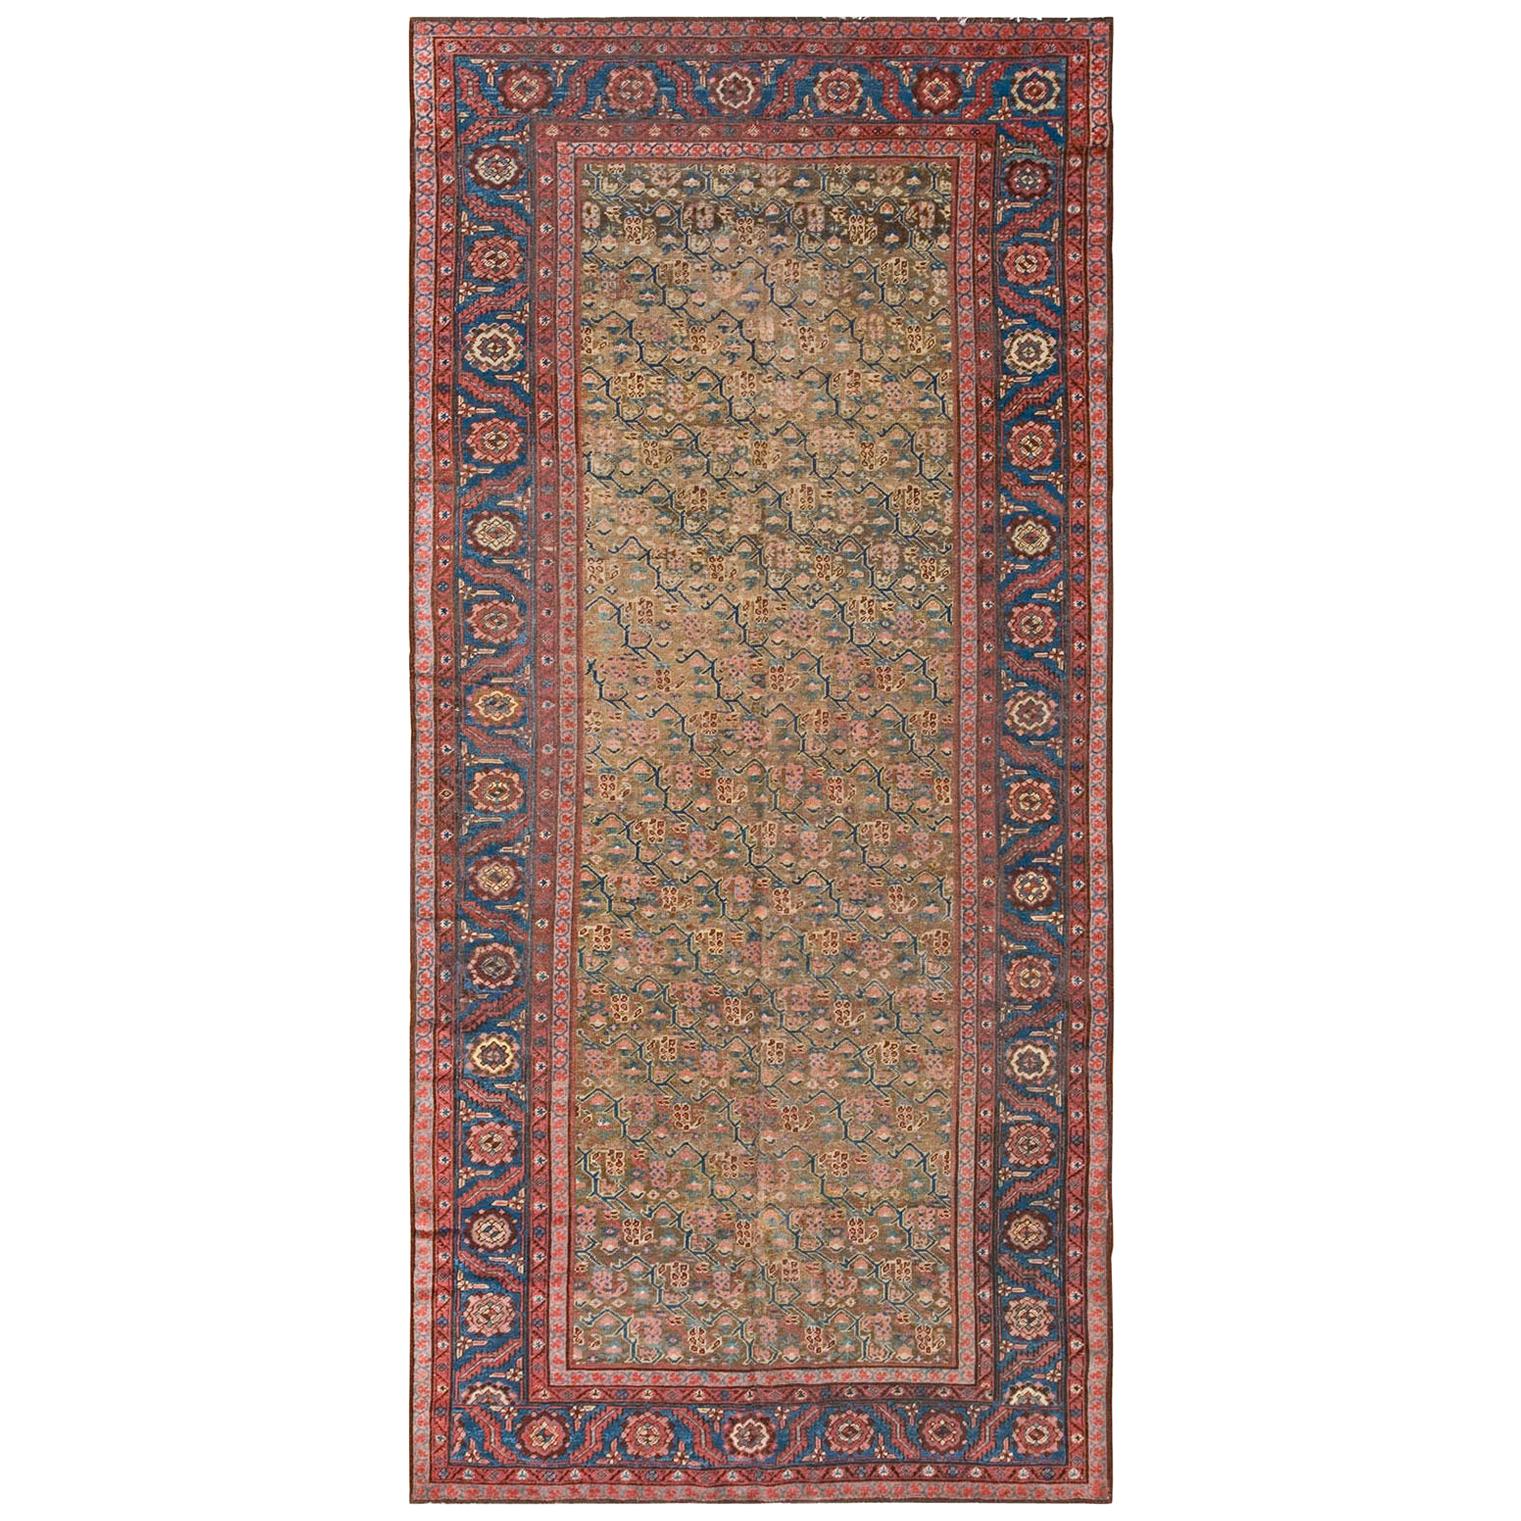 19th Century N.W. Persian Carpet ( 5' x 10'7" - 152 x 322 )